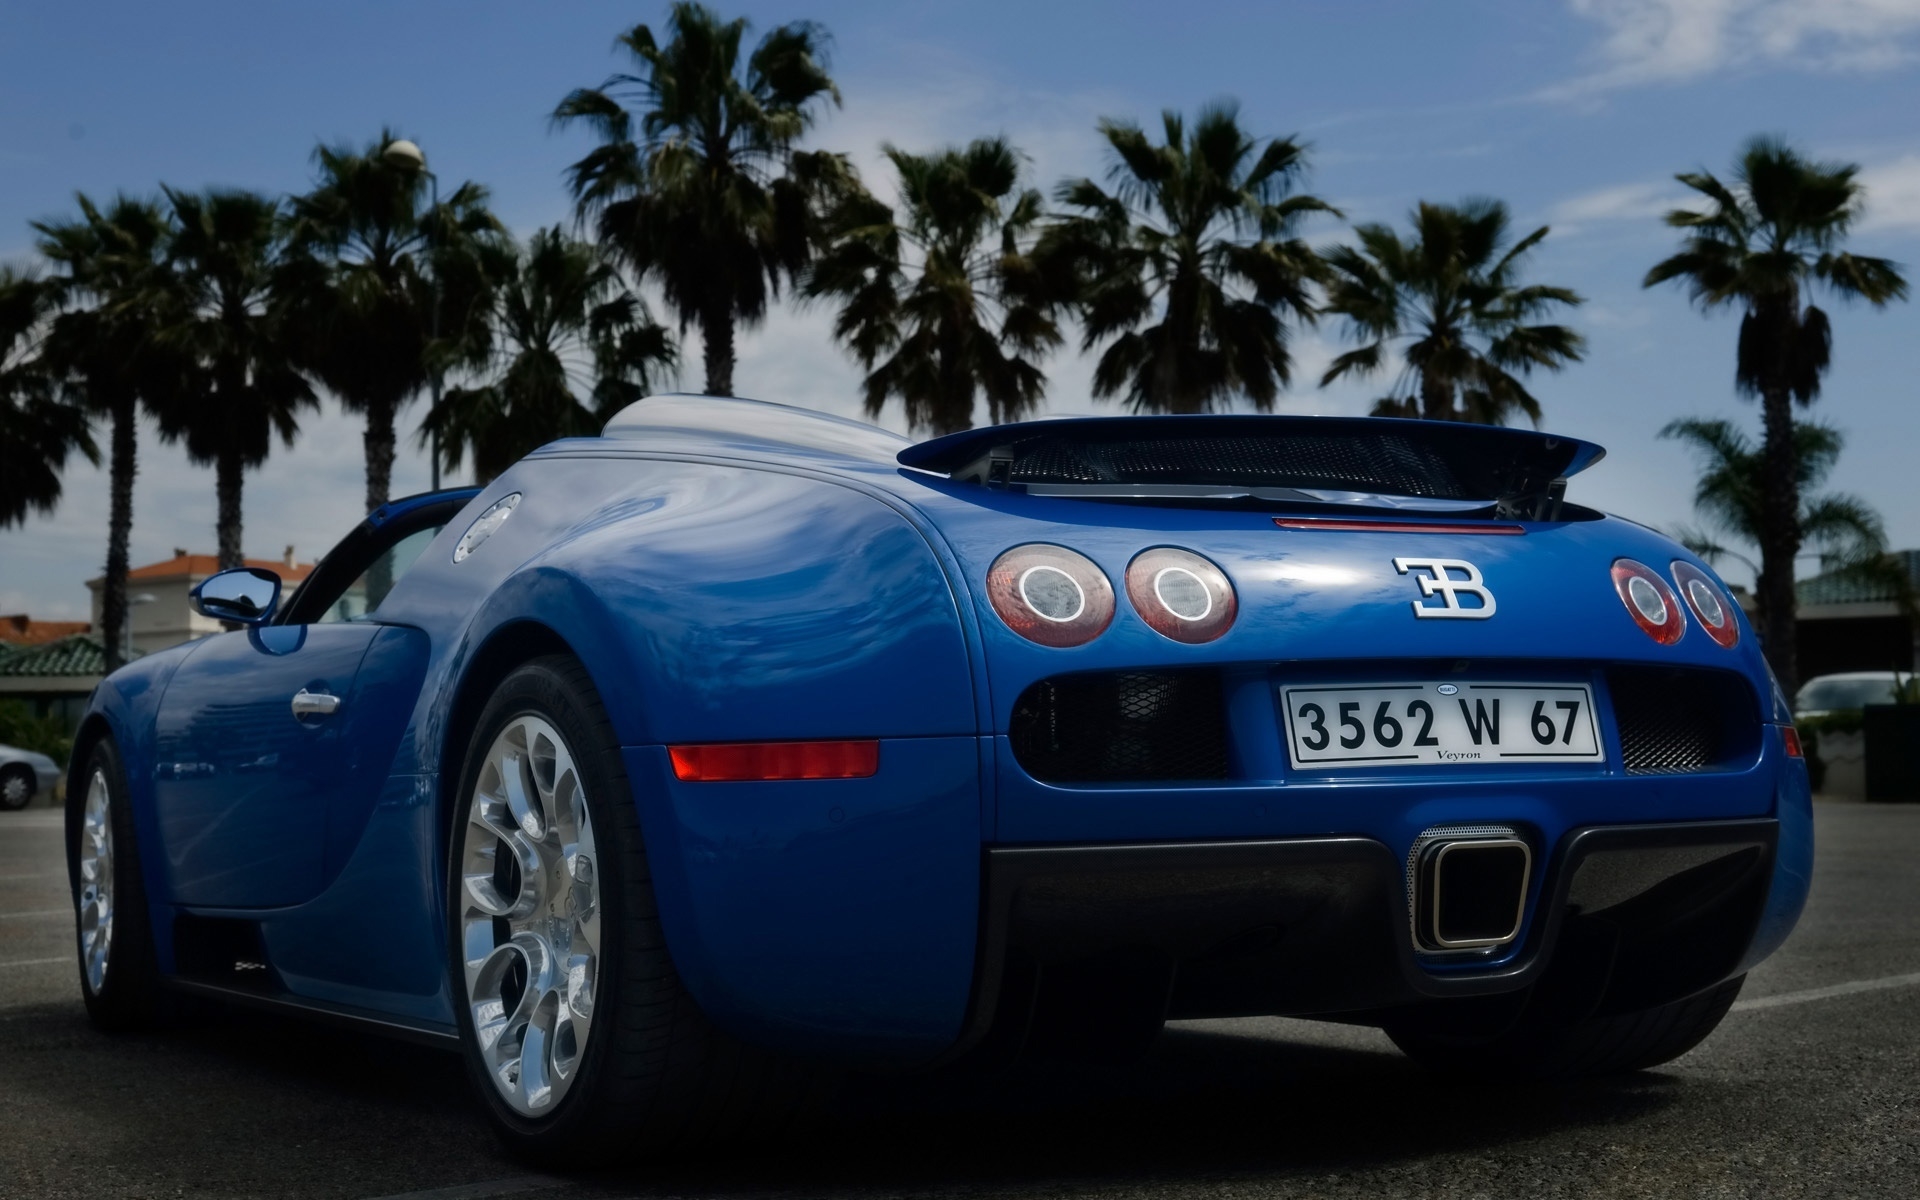 Bugatti Veyron 16.4 Grand Sport 2010 in Cannes - Rear Angle 2 for 1920 x 1200 widescreen resolution